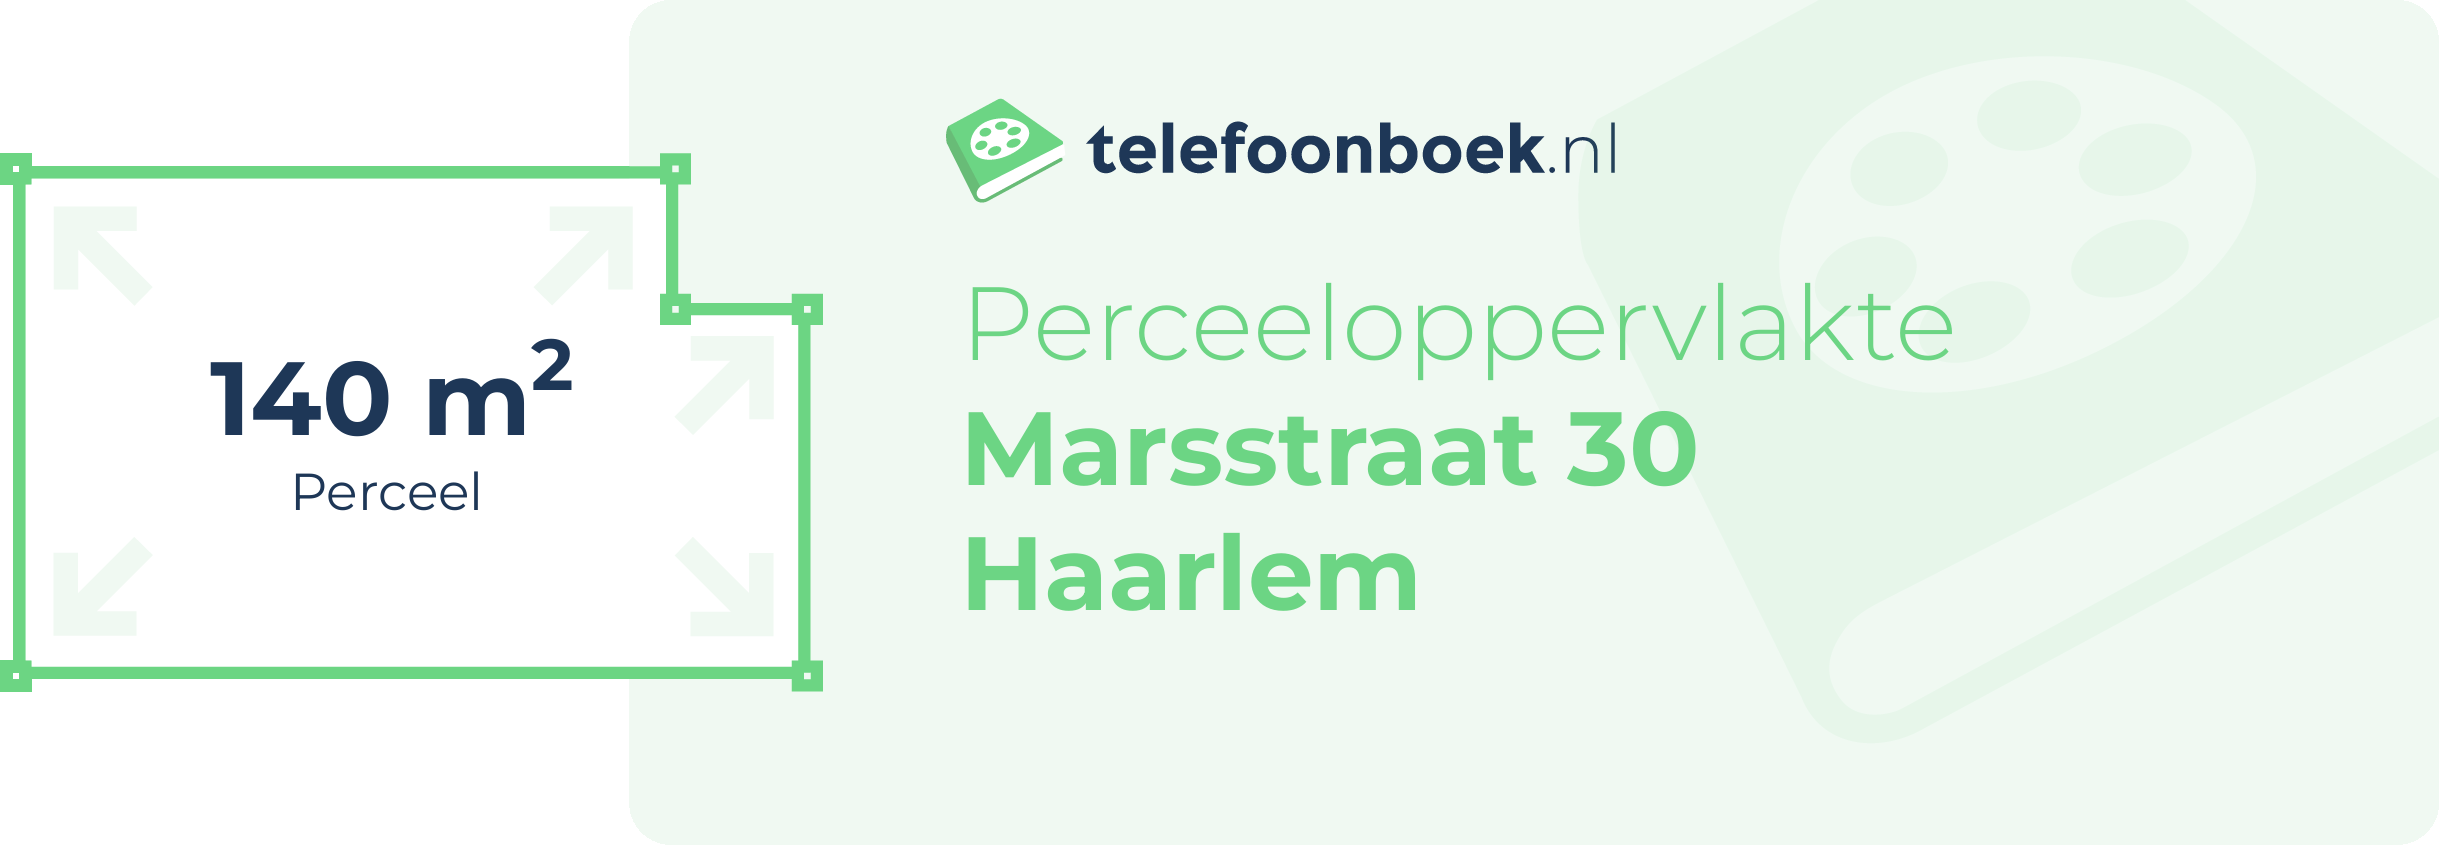 Perceeloppervlakte Marsstraat 30 Haarlem